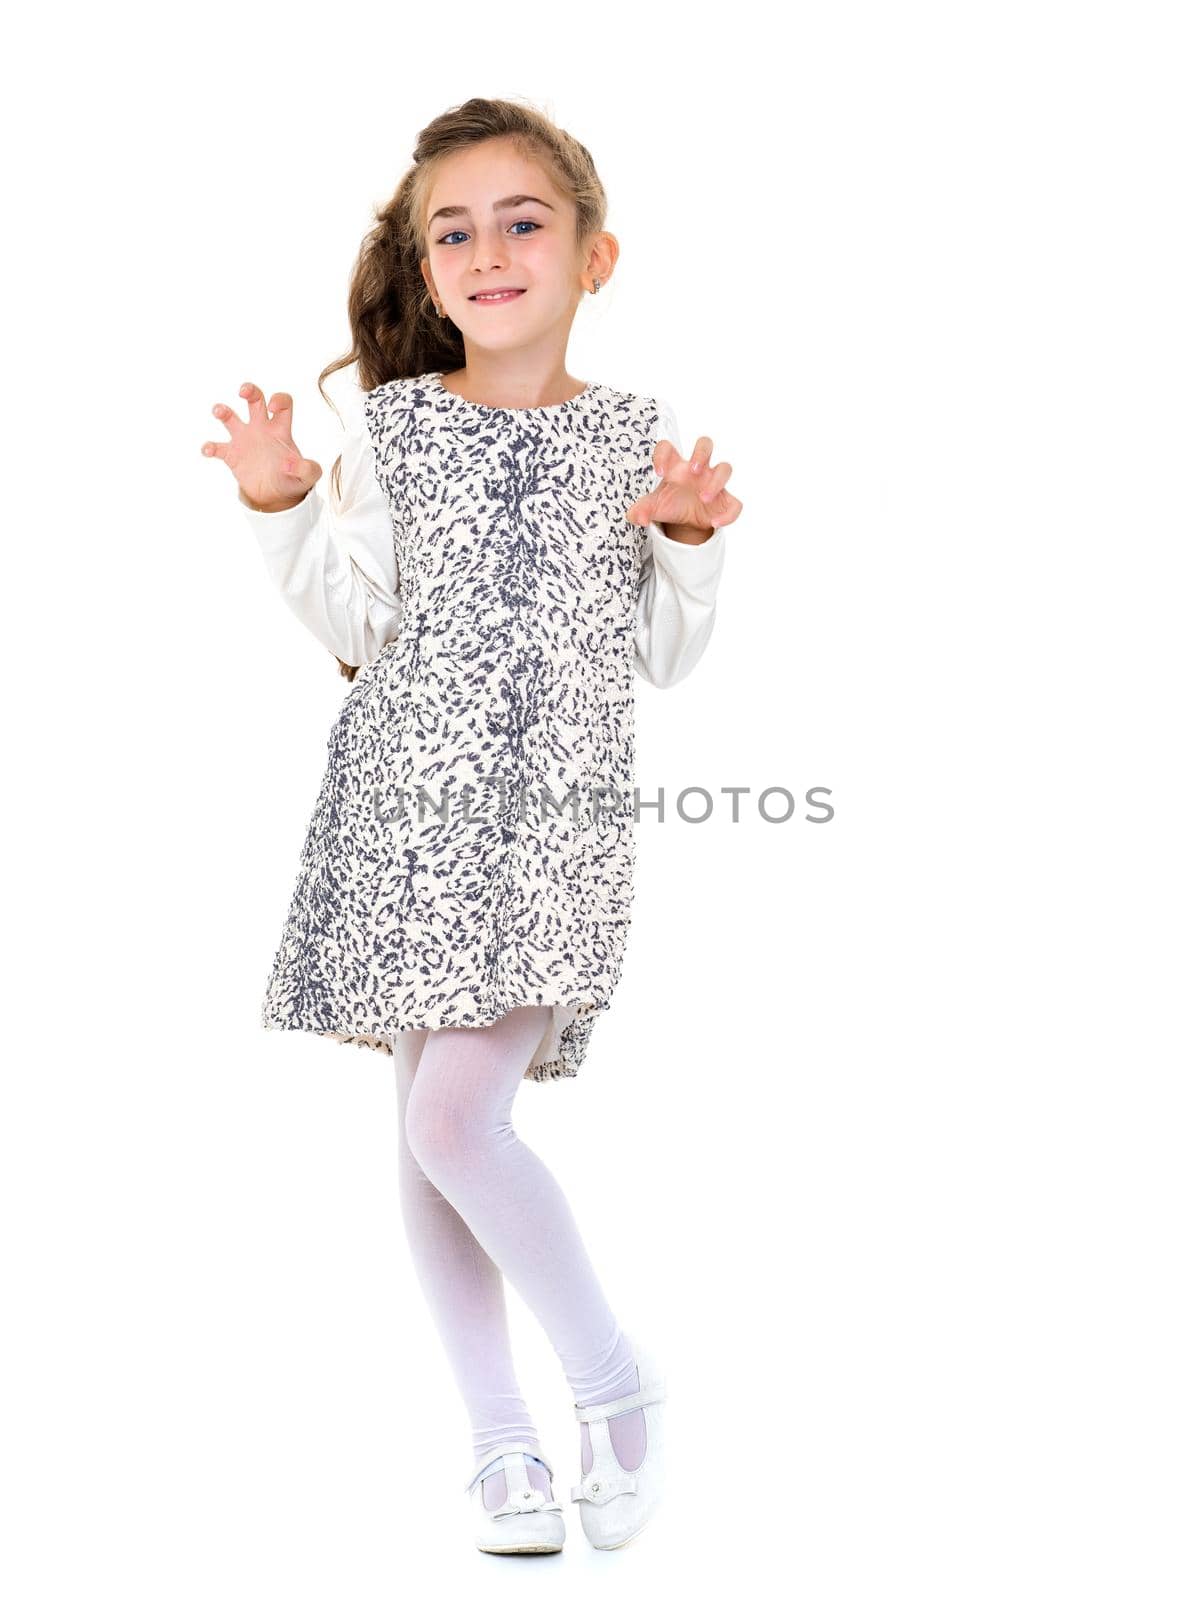 Joyful girl with arms raised. by kolesnikov_studio